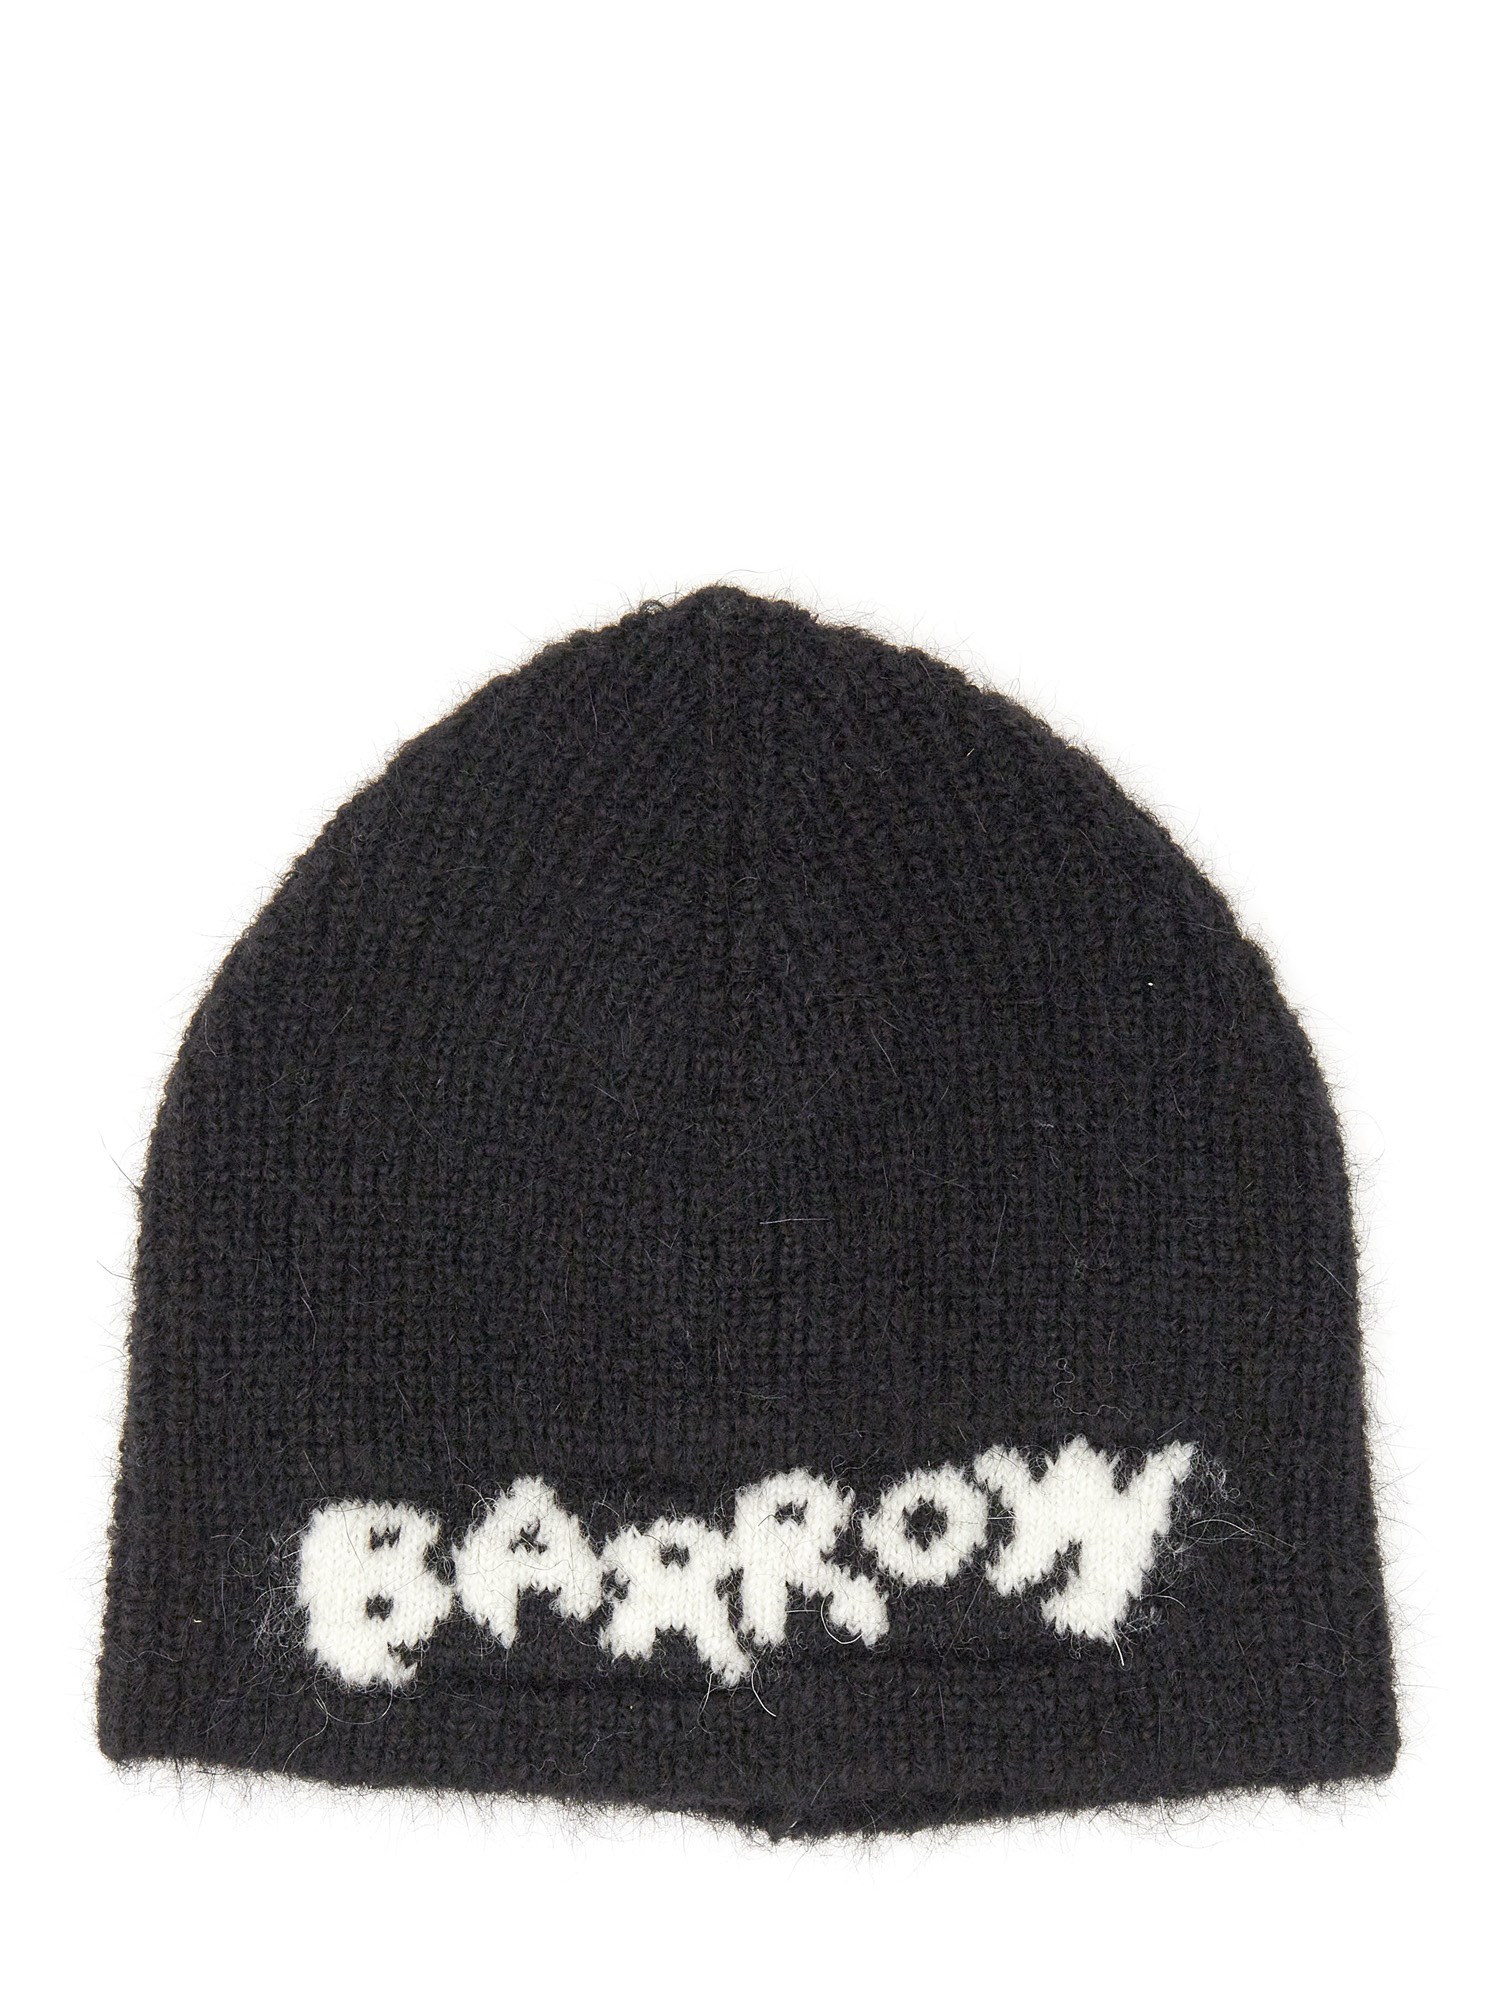 barrow beanie hat